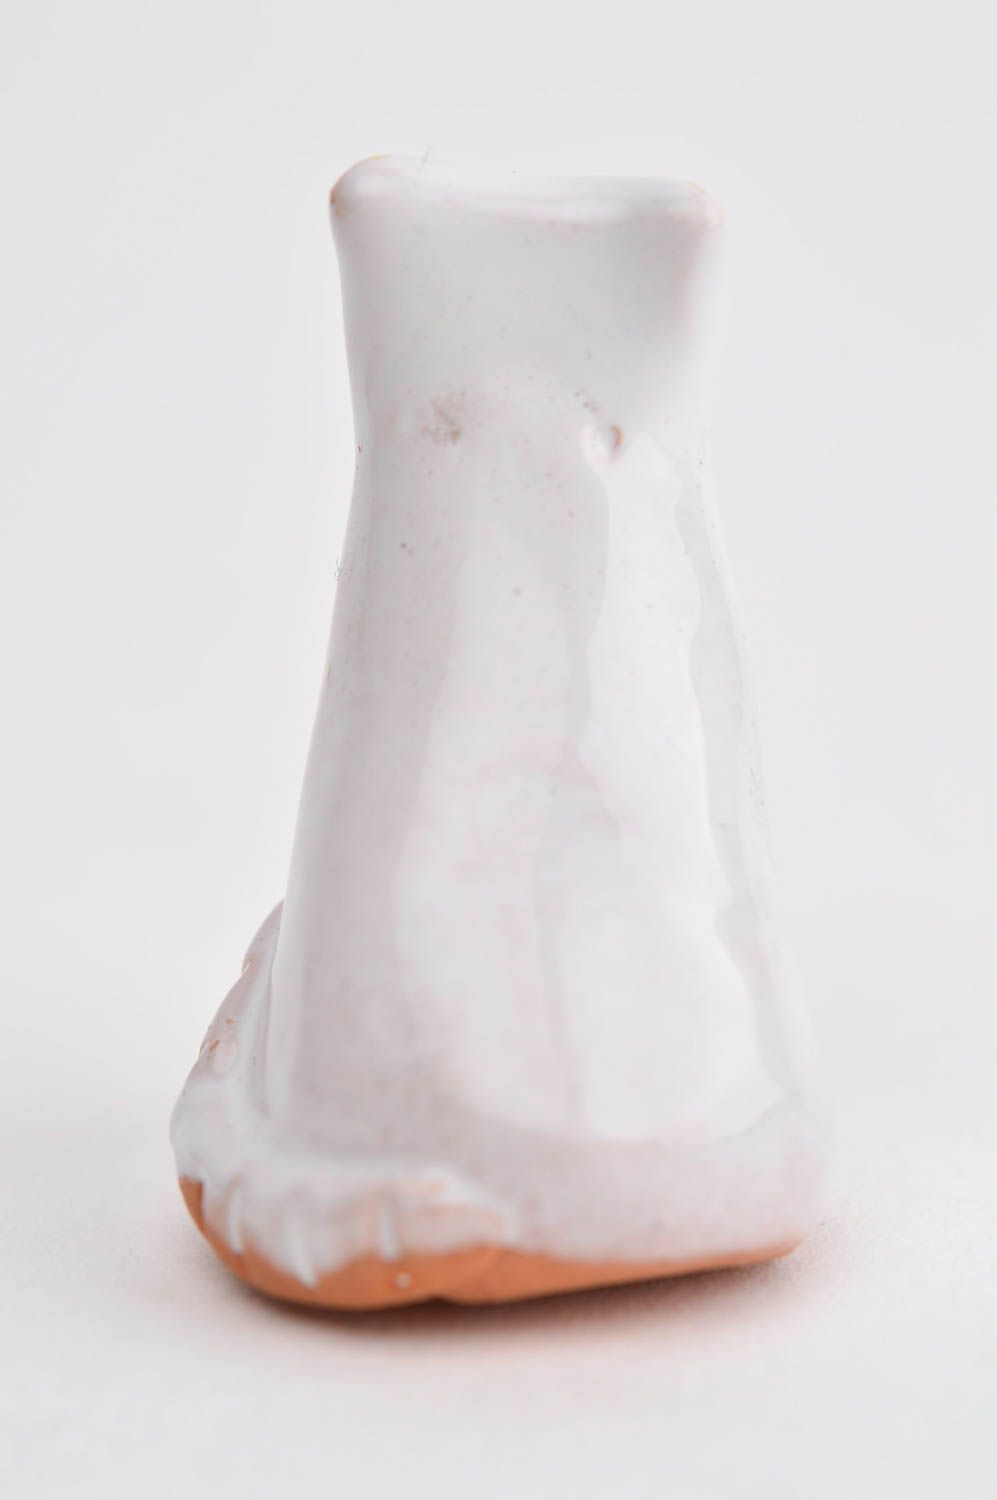 Handmade Keramik Deko Figur aus Ton Tier Statue Miniatur Figur weiße Katze schön foto 10